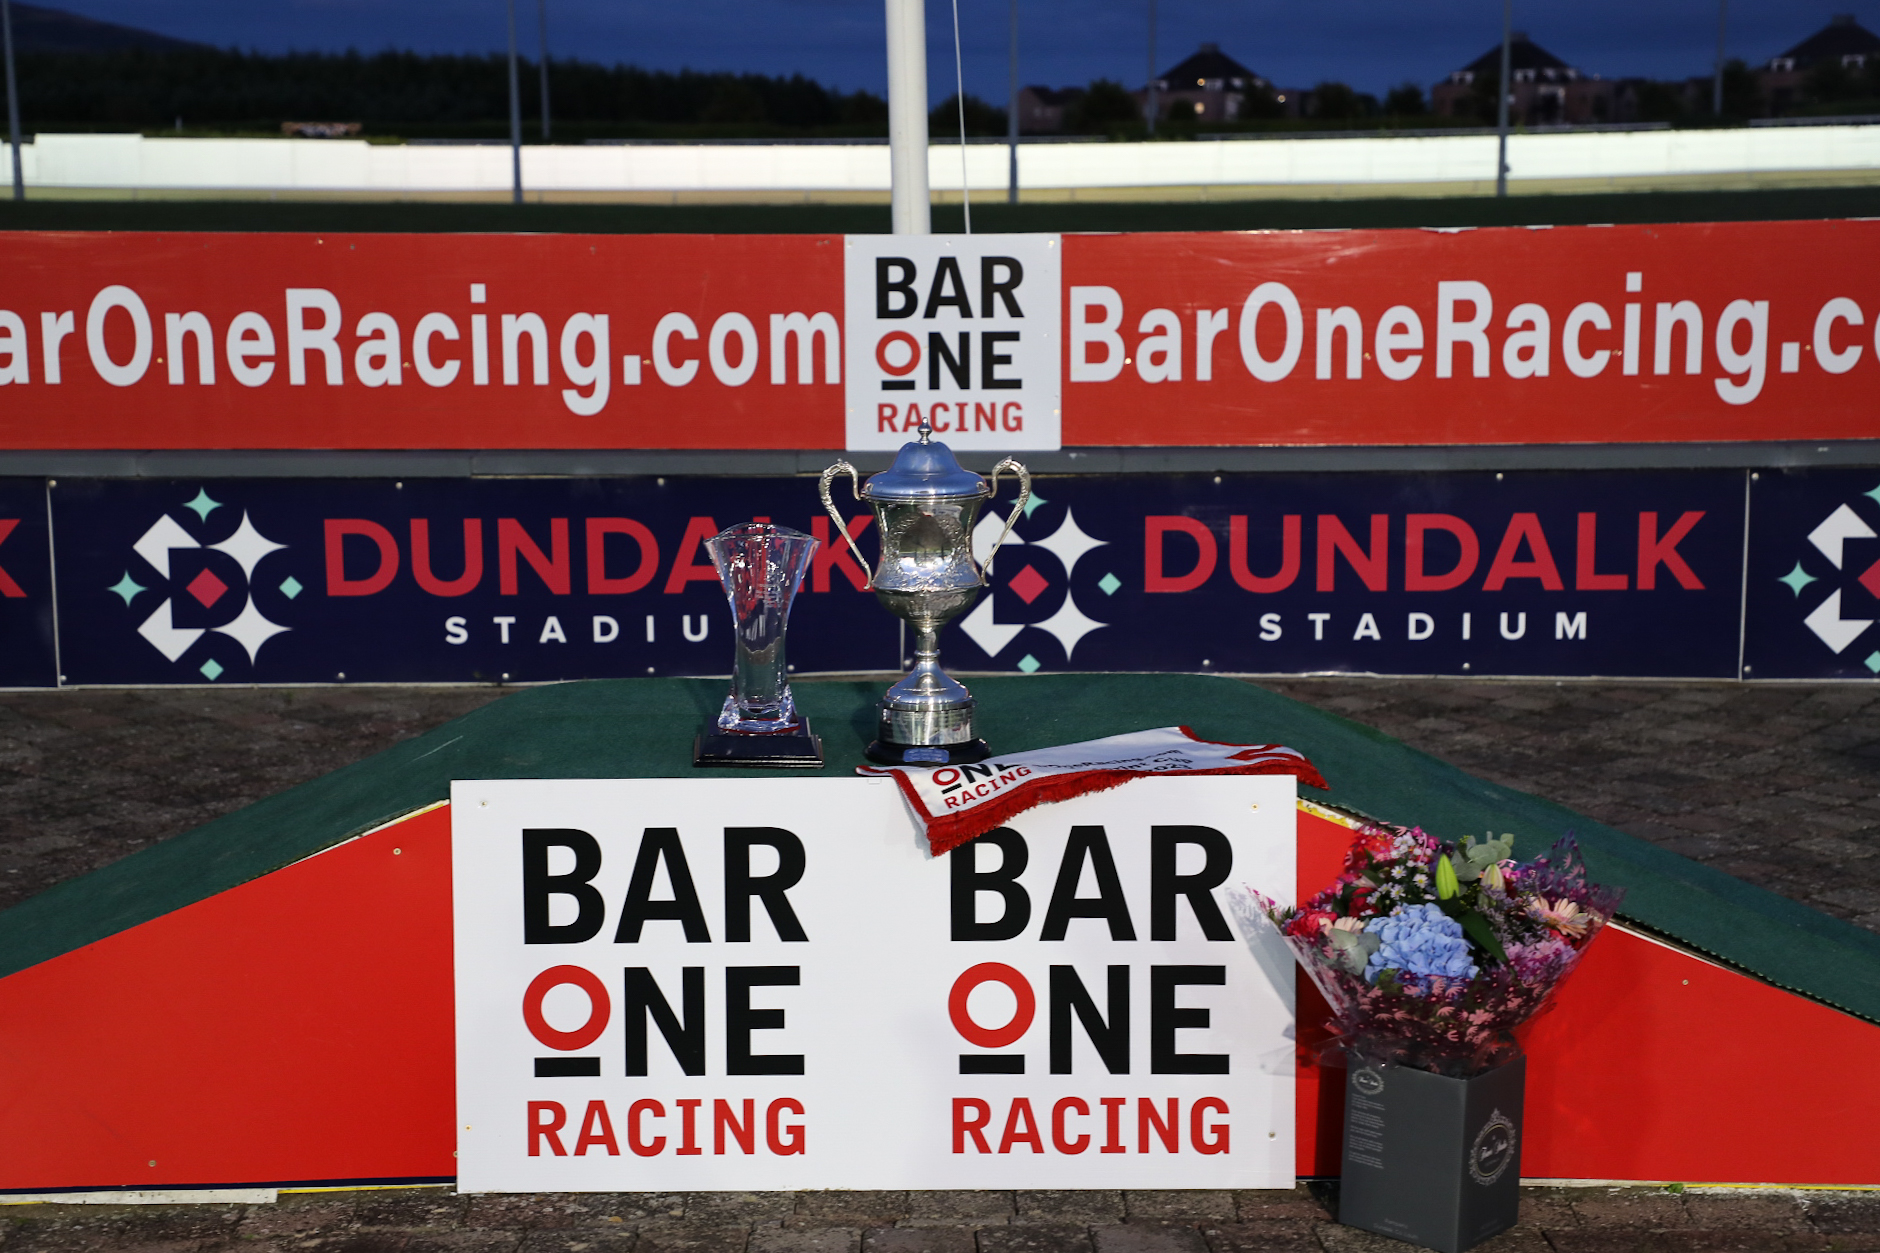 BAR ONE RACING SPRINT CUP HEATS GET UNDERWAY AT DUNDALK STADIUM THIS SATURDAY!